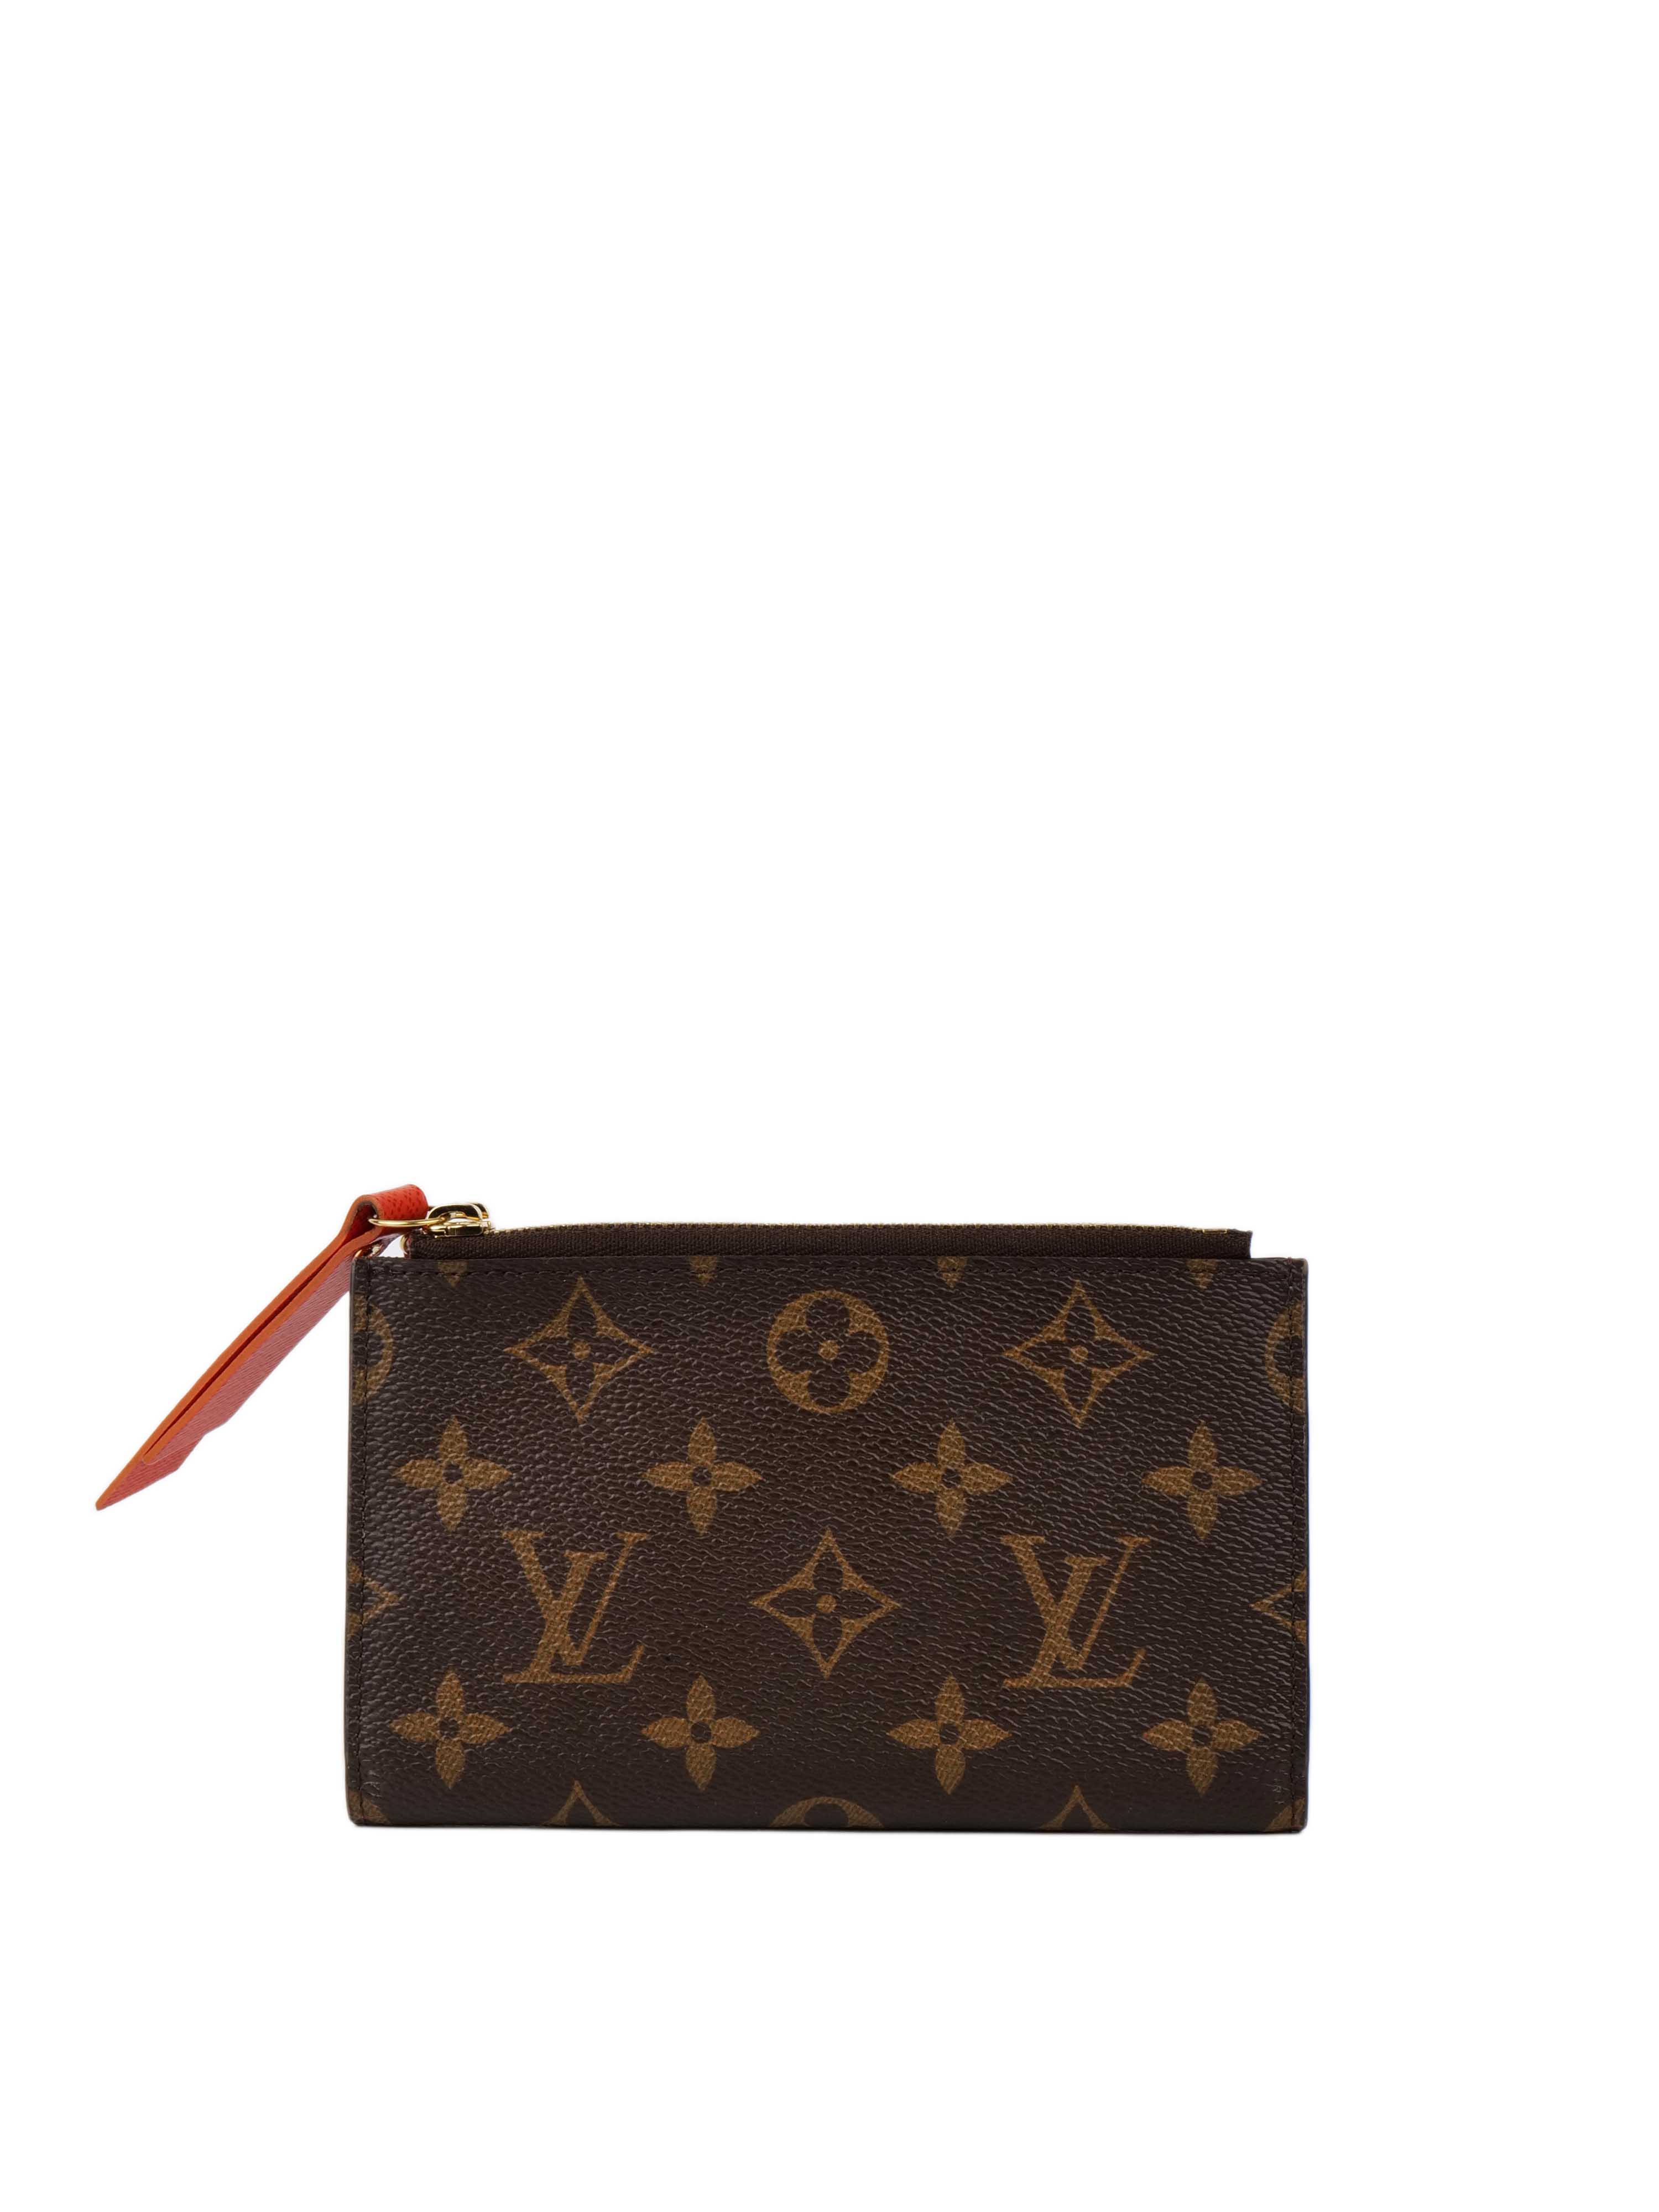 Louis Vuitton Monogram Double Zipped Wallet.